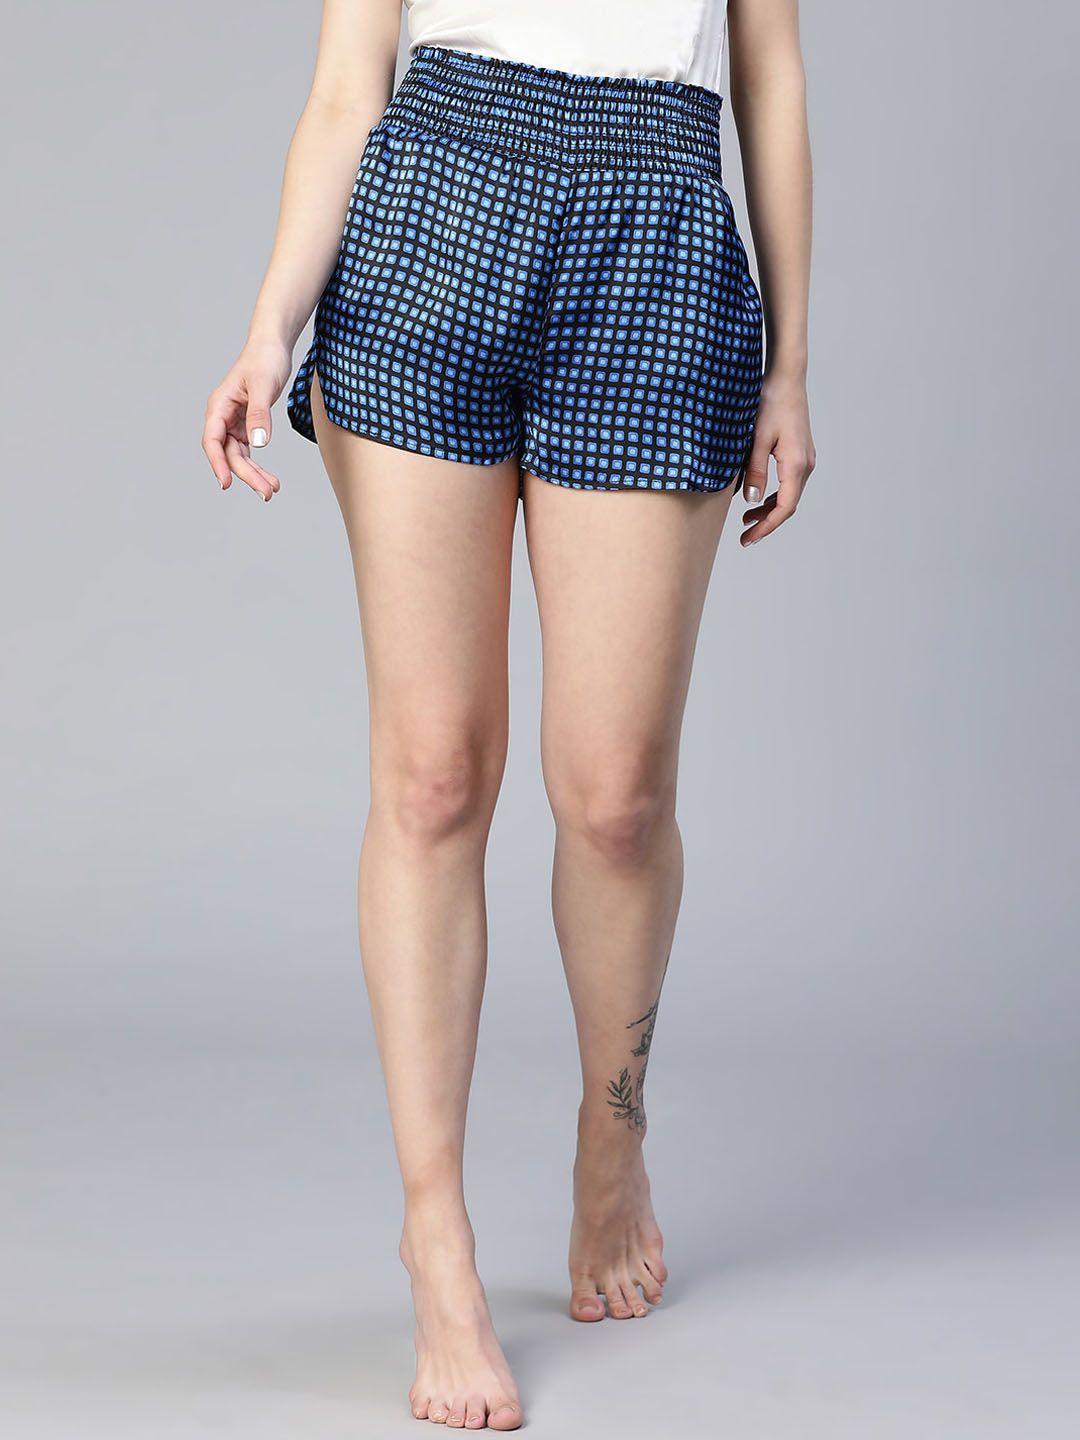 oxolloxo-women-geometric-printed-mid-rise-shorts